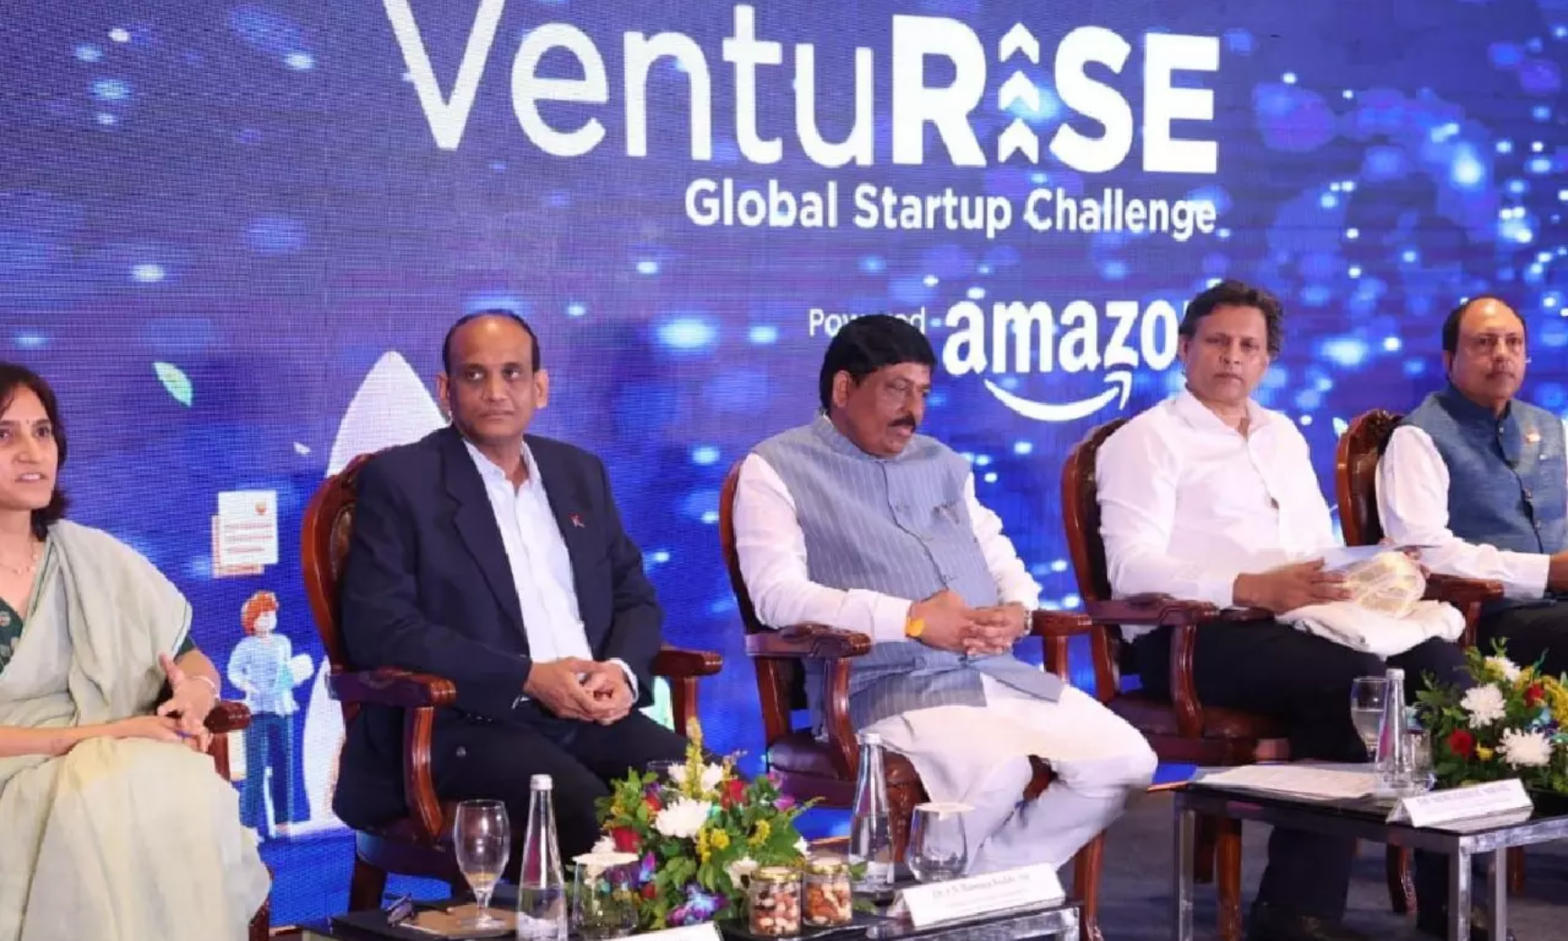 VentuRISE Global Startup Challenge